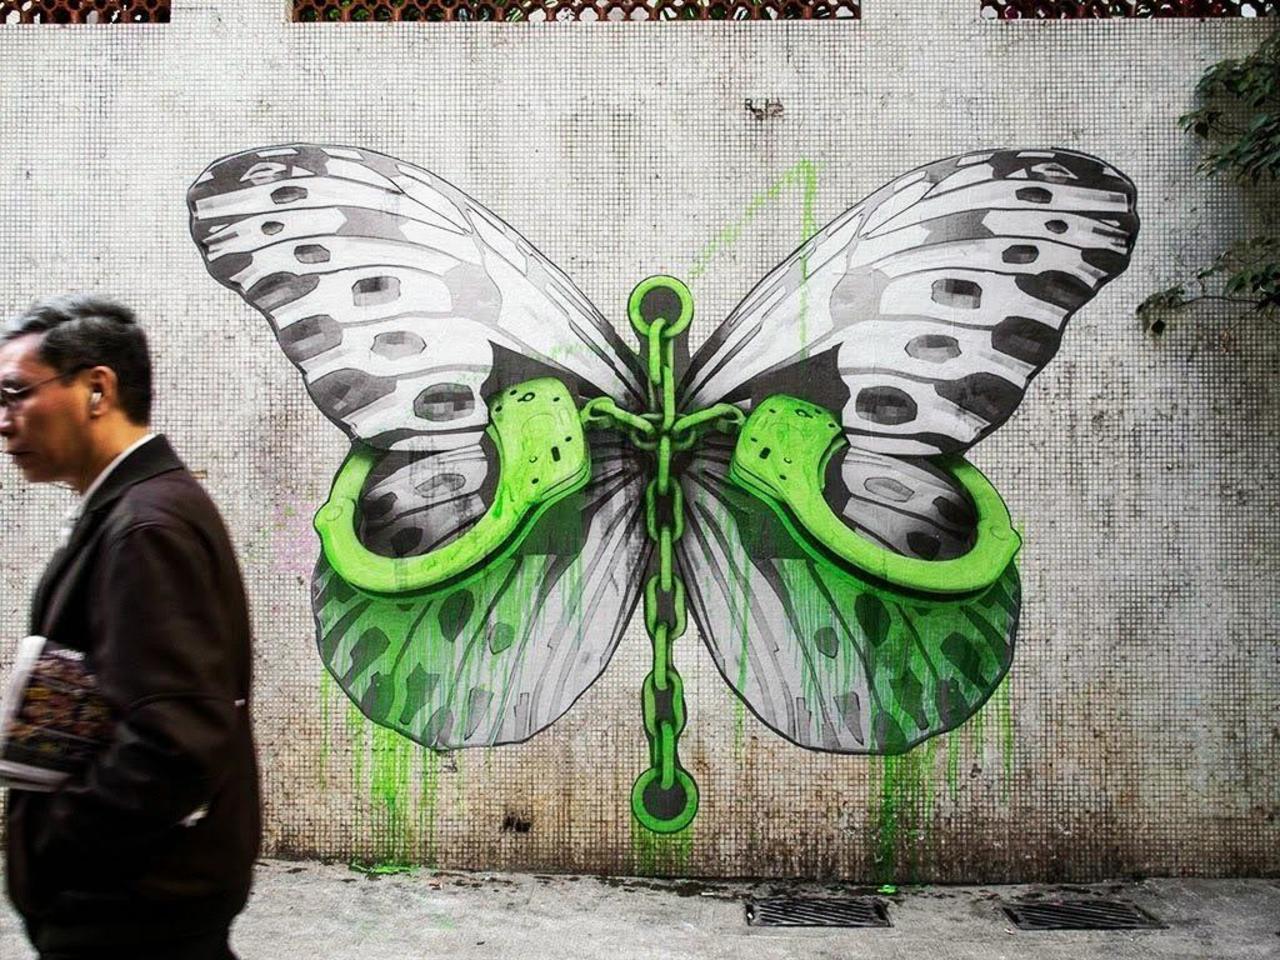 RT @paulkoch36: #Schmetterling in #Handschellen  #streetart #art #graffiti #urbanart http://t.co/MlcYd58Tqu